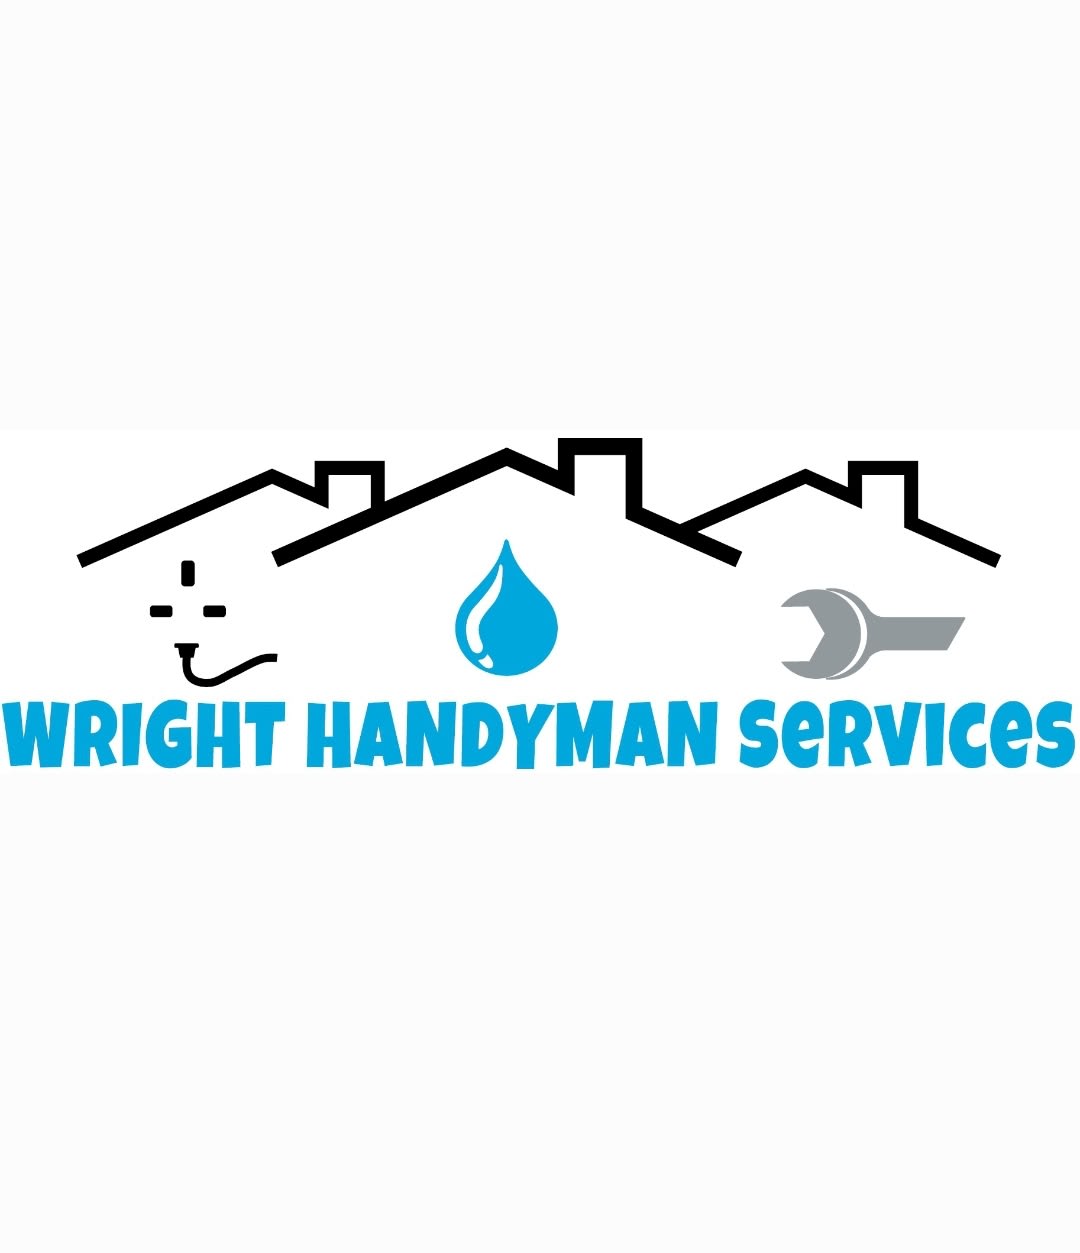 Wright Handyman Services